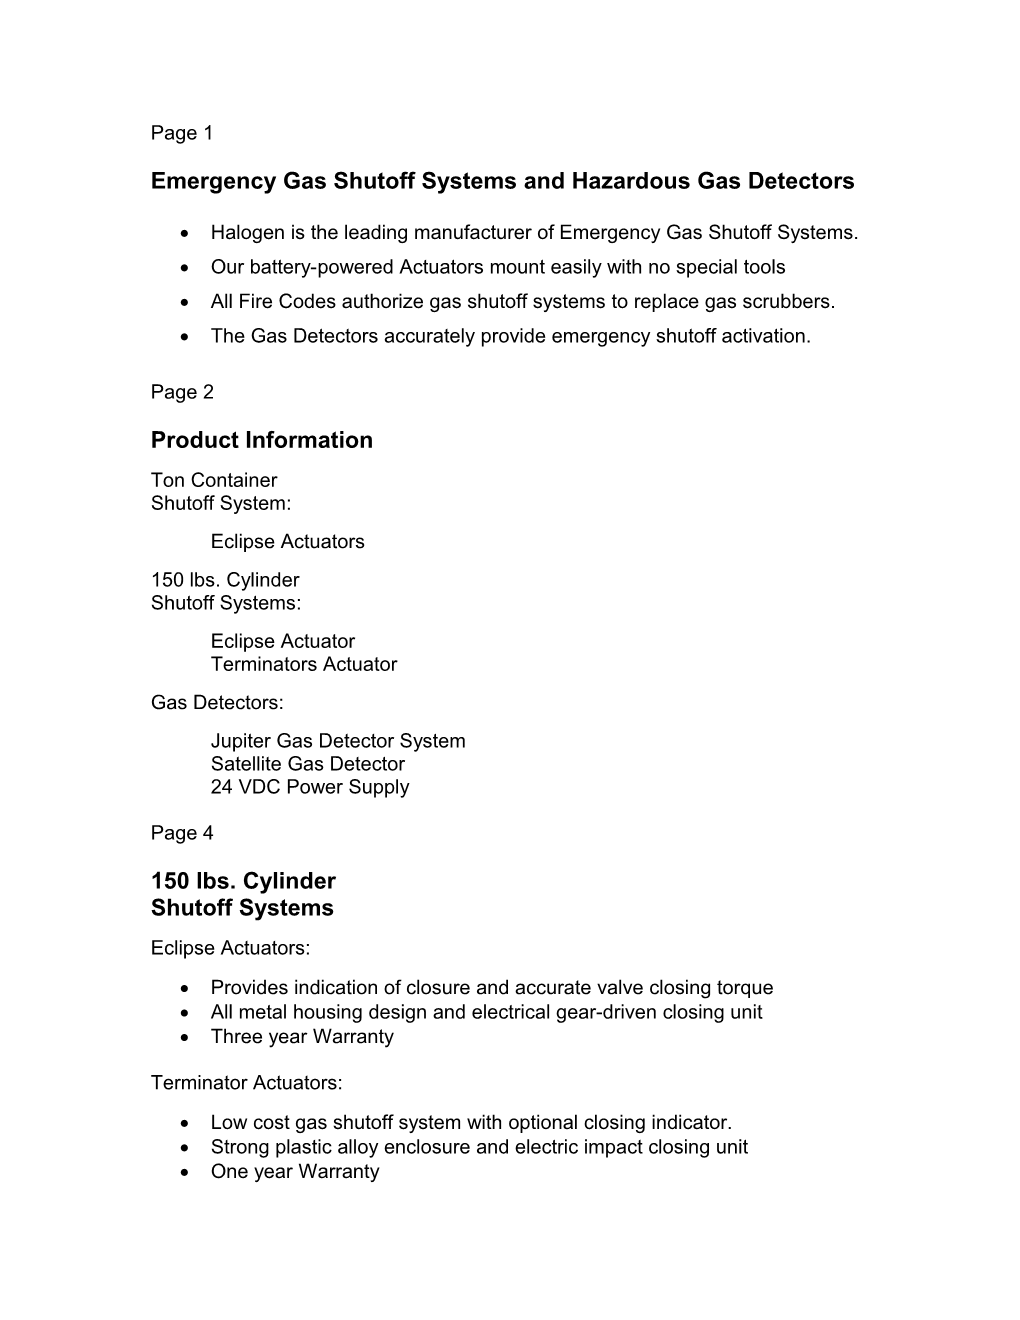 Emergency Gas Shutoff Systems and Hazardous Gas Detectors